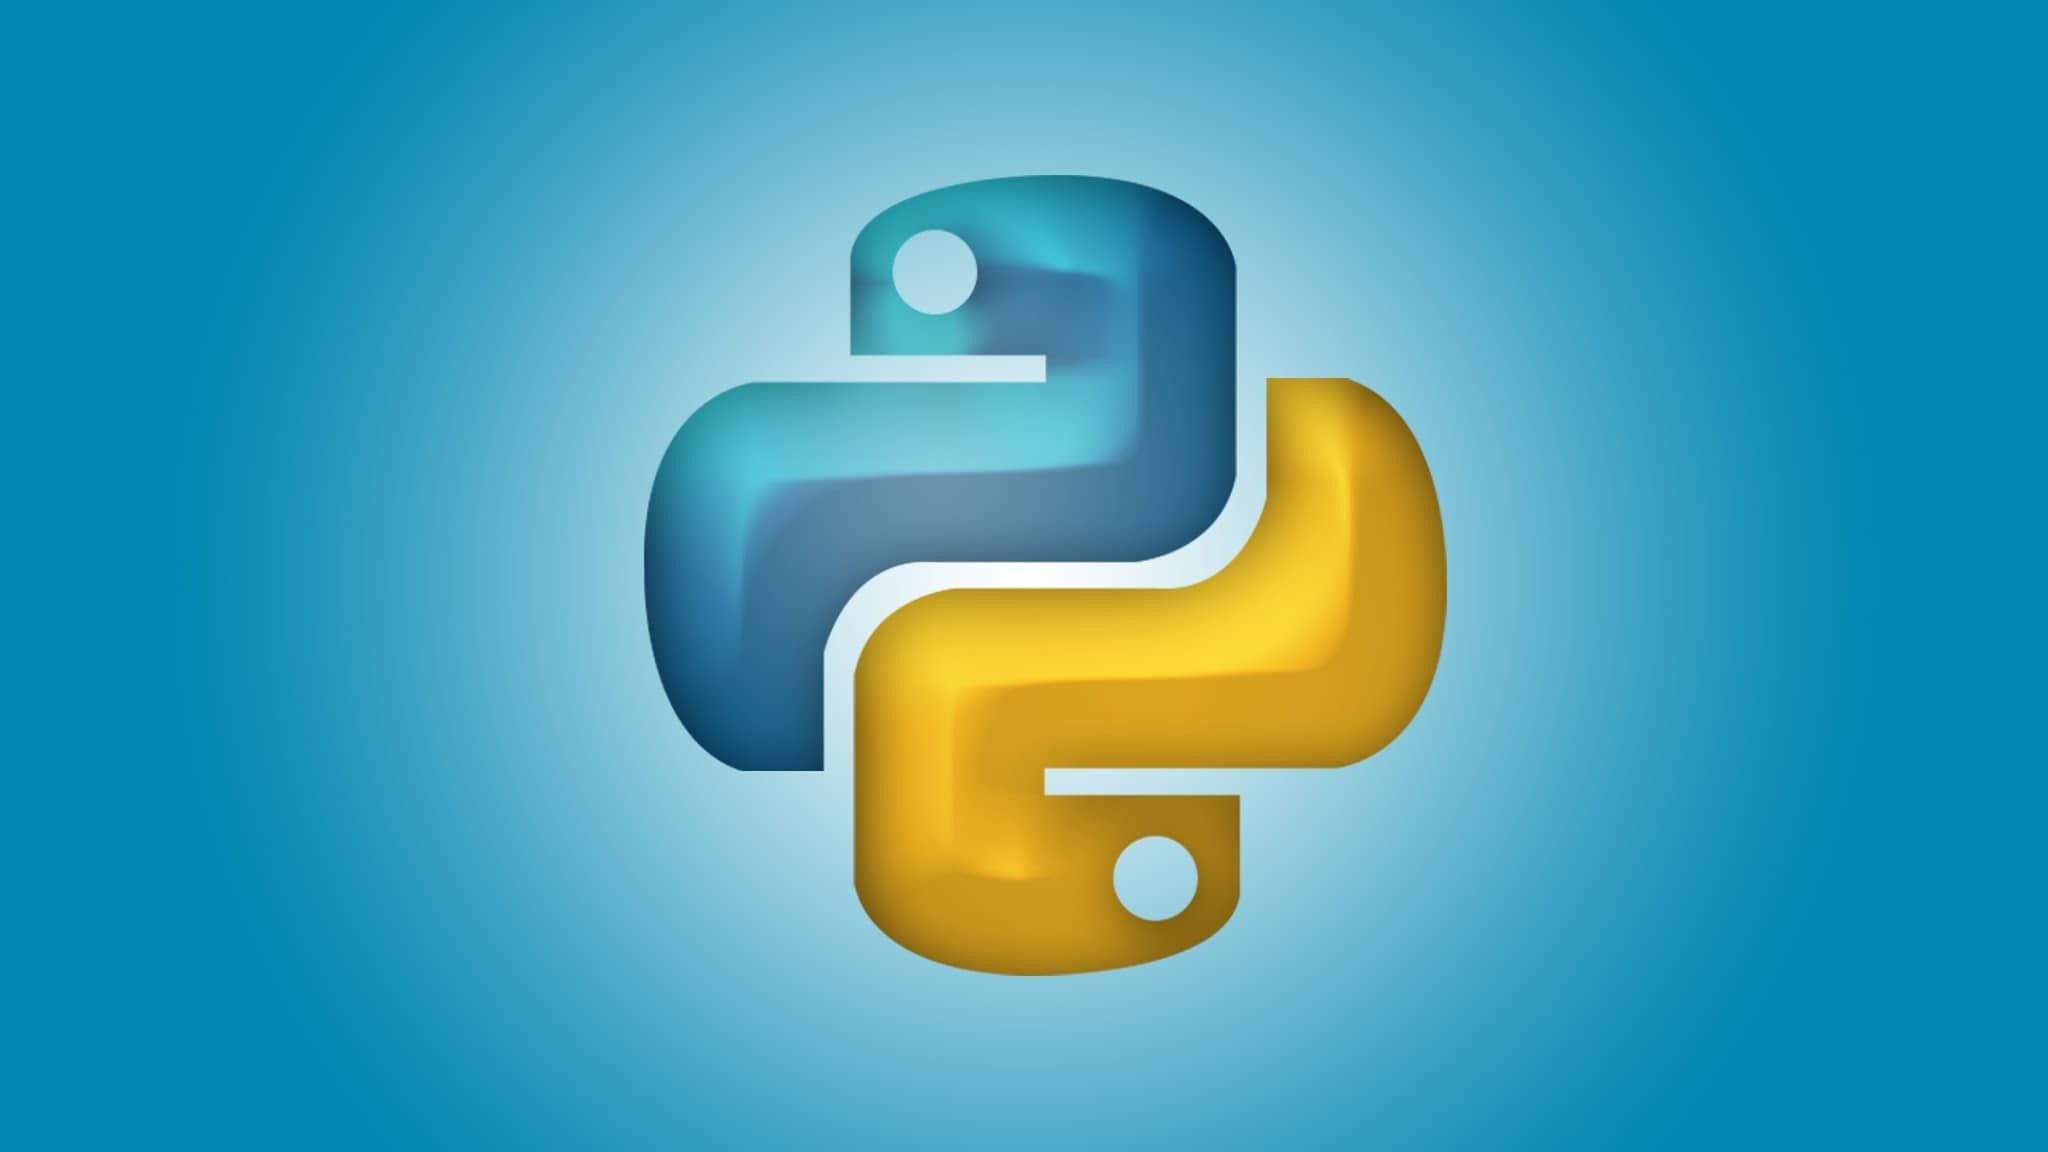 Python Logo Wallpapers - Wallpaper Cave